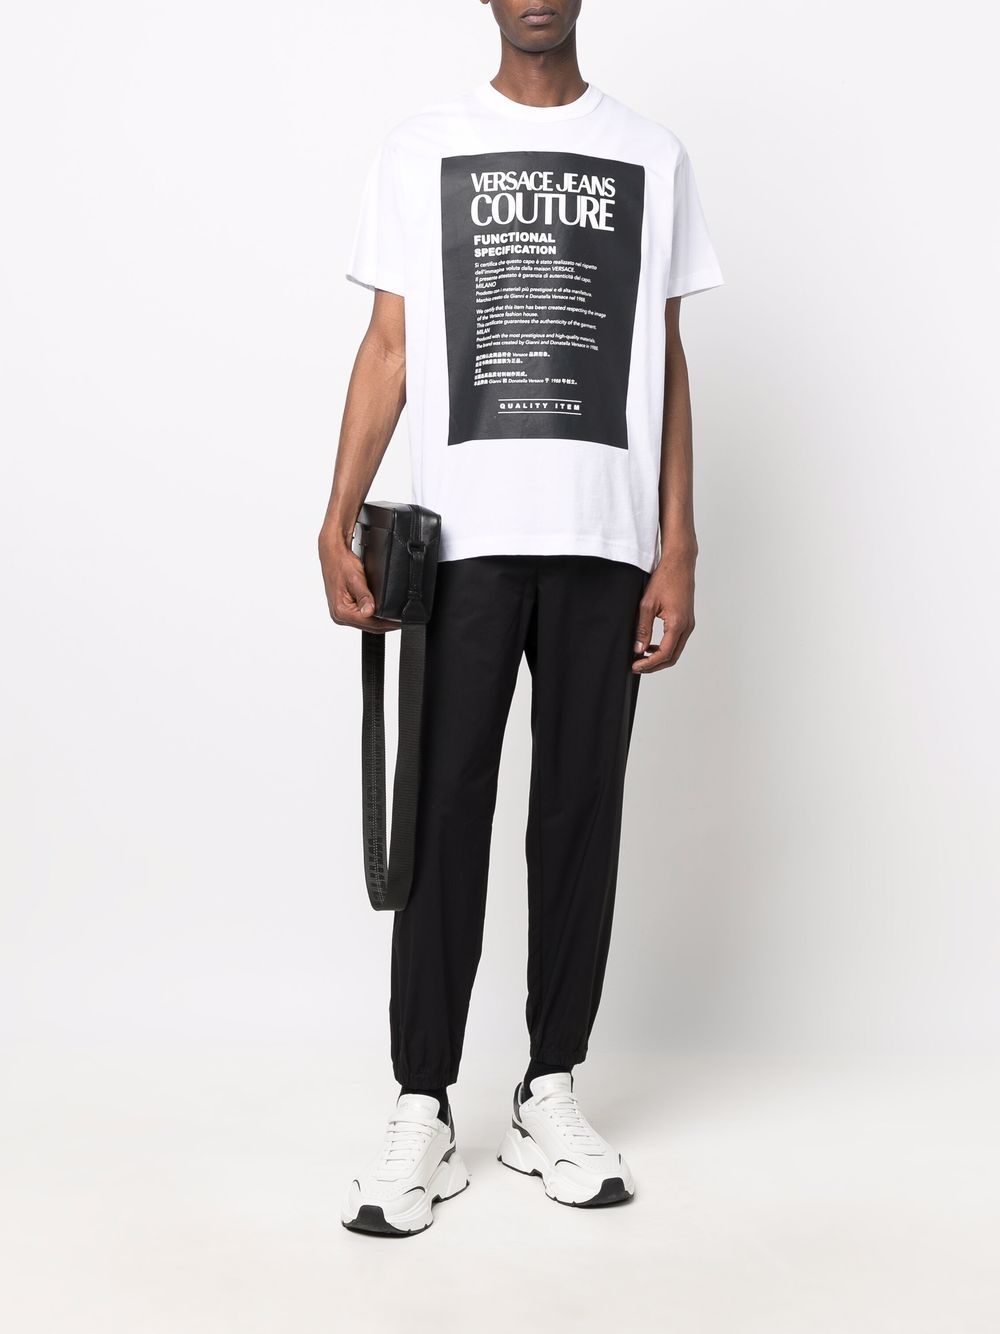 фото Versace jeans couture футболка с графичным принтом